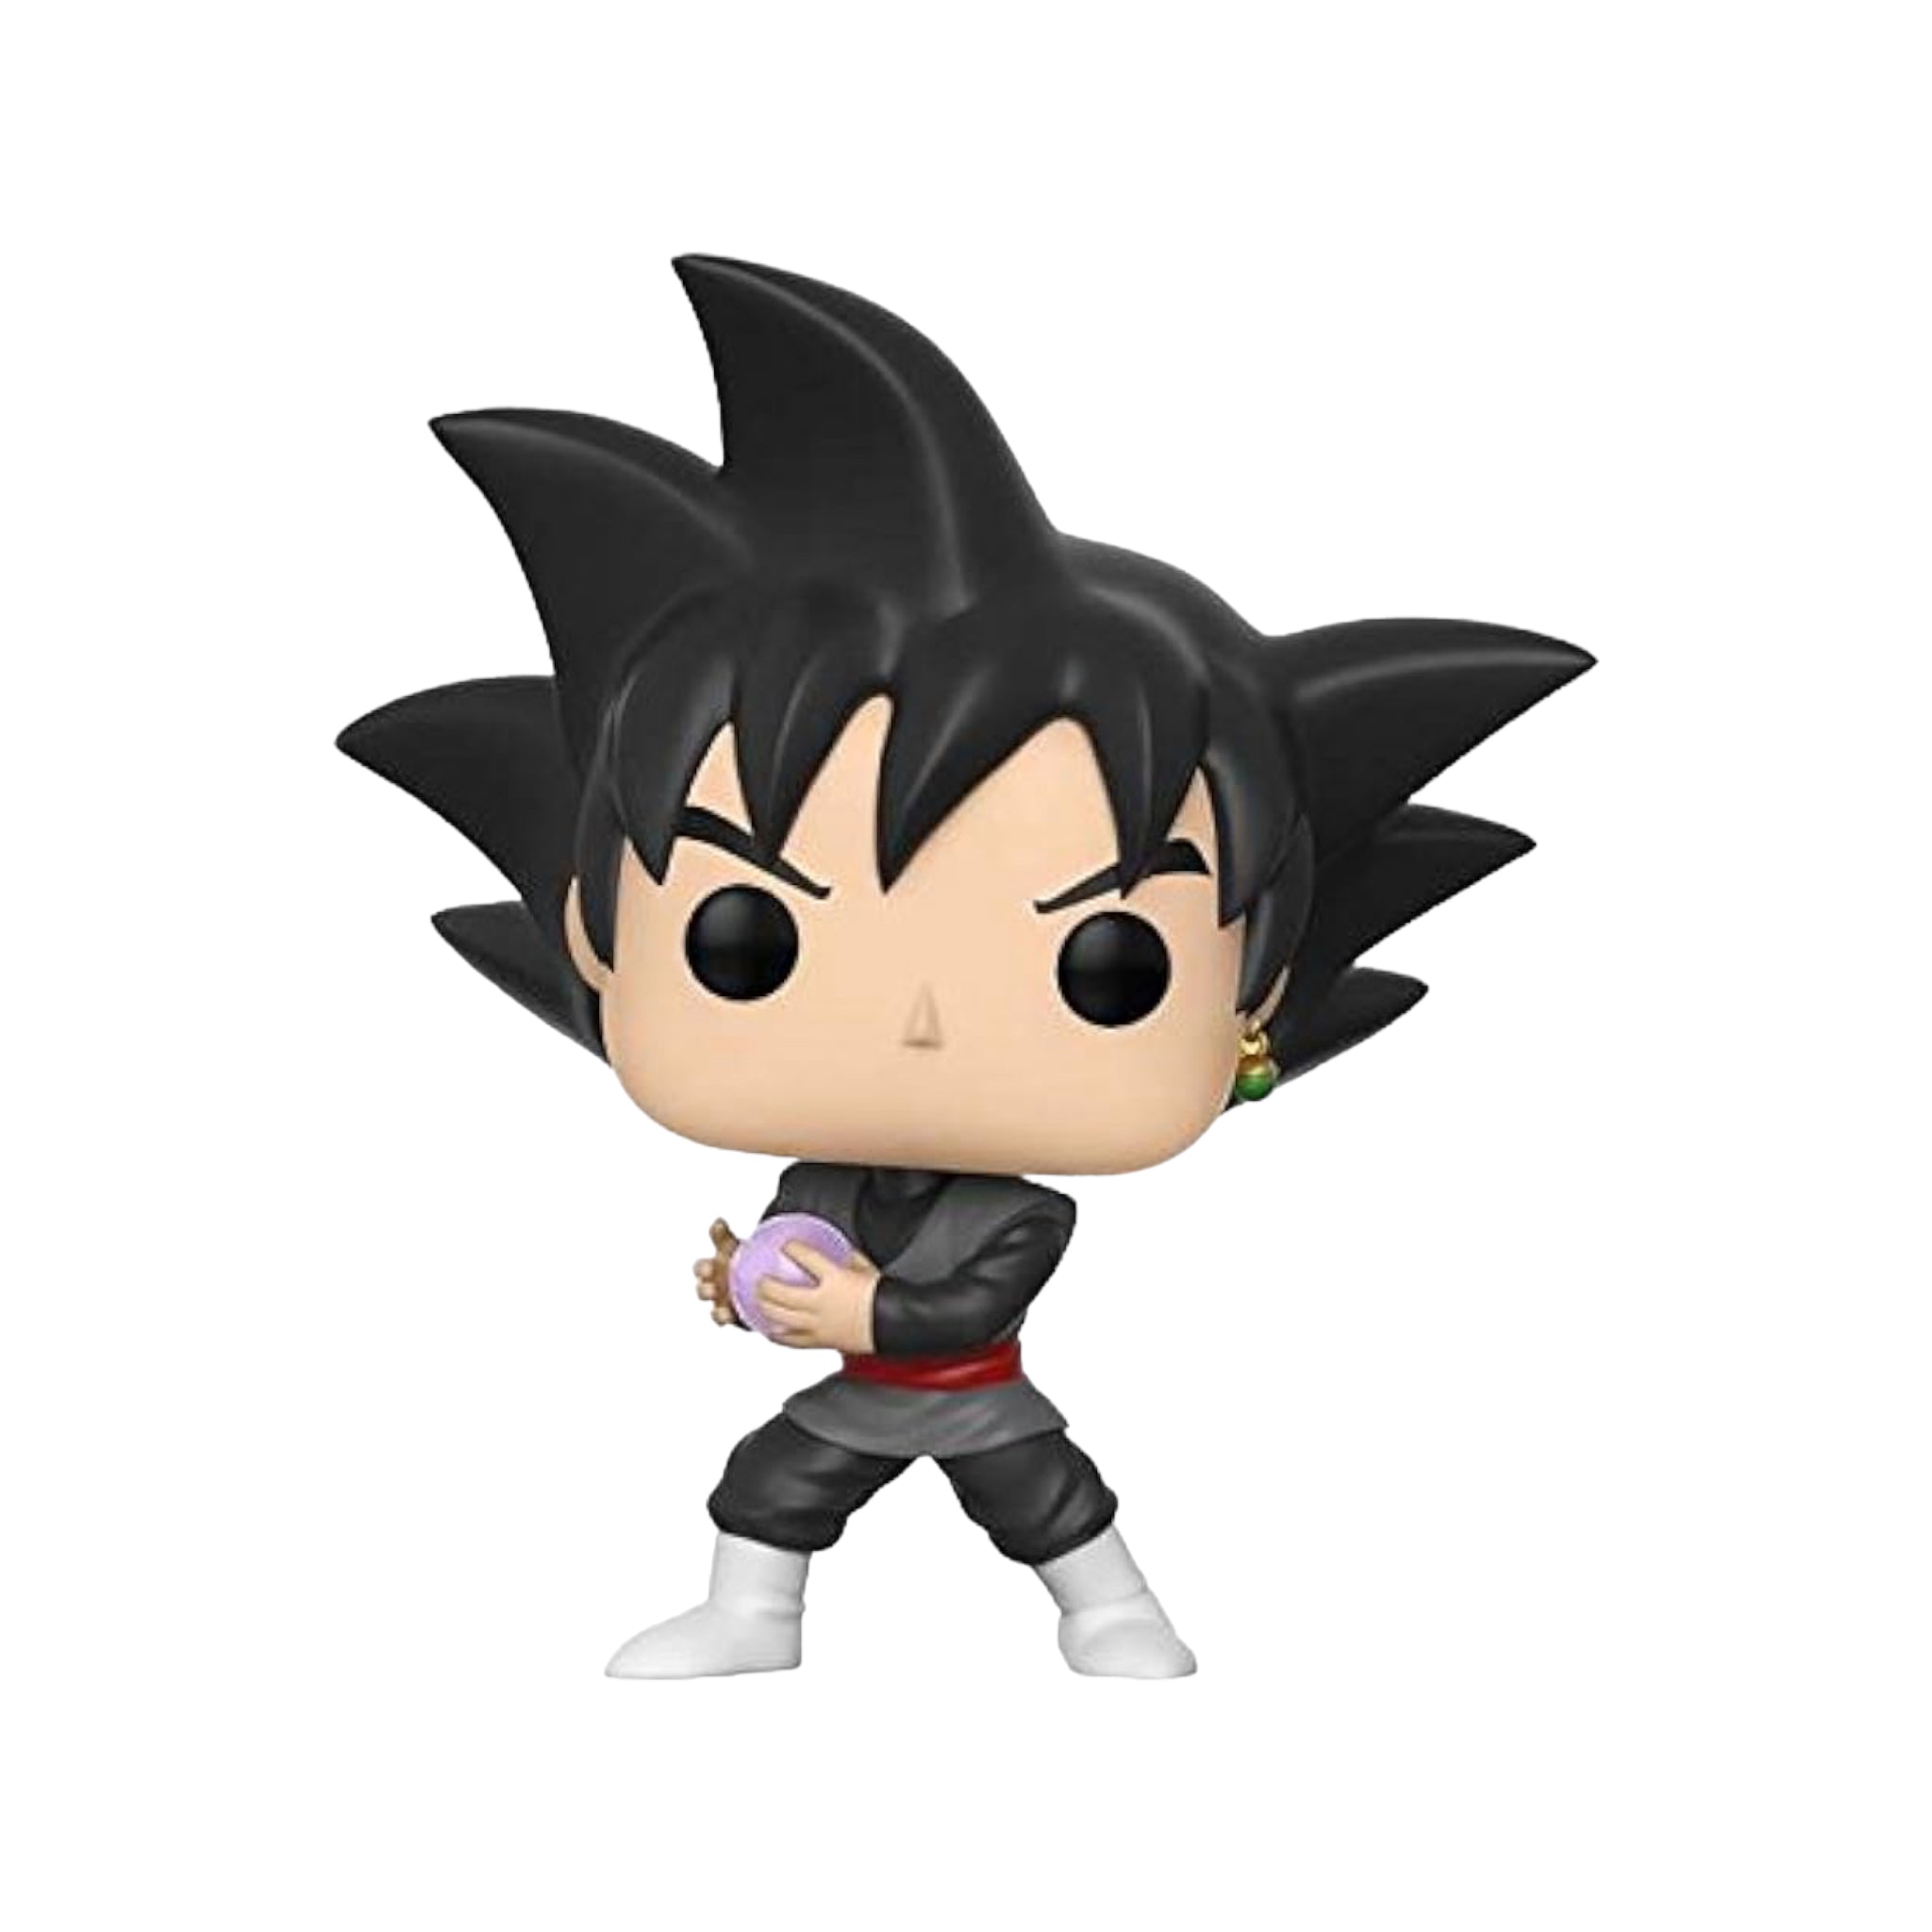 Goku Black #314 Funko Pop! - Dragon Ball Super